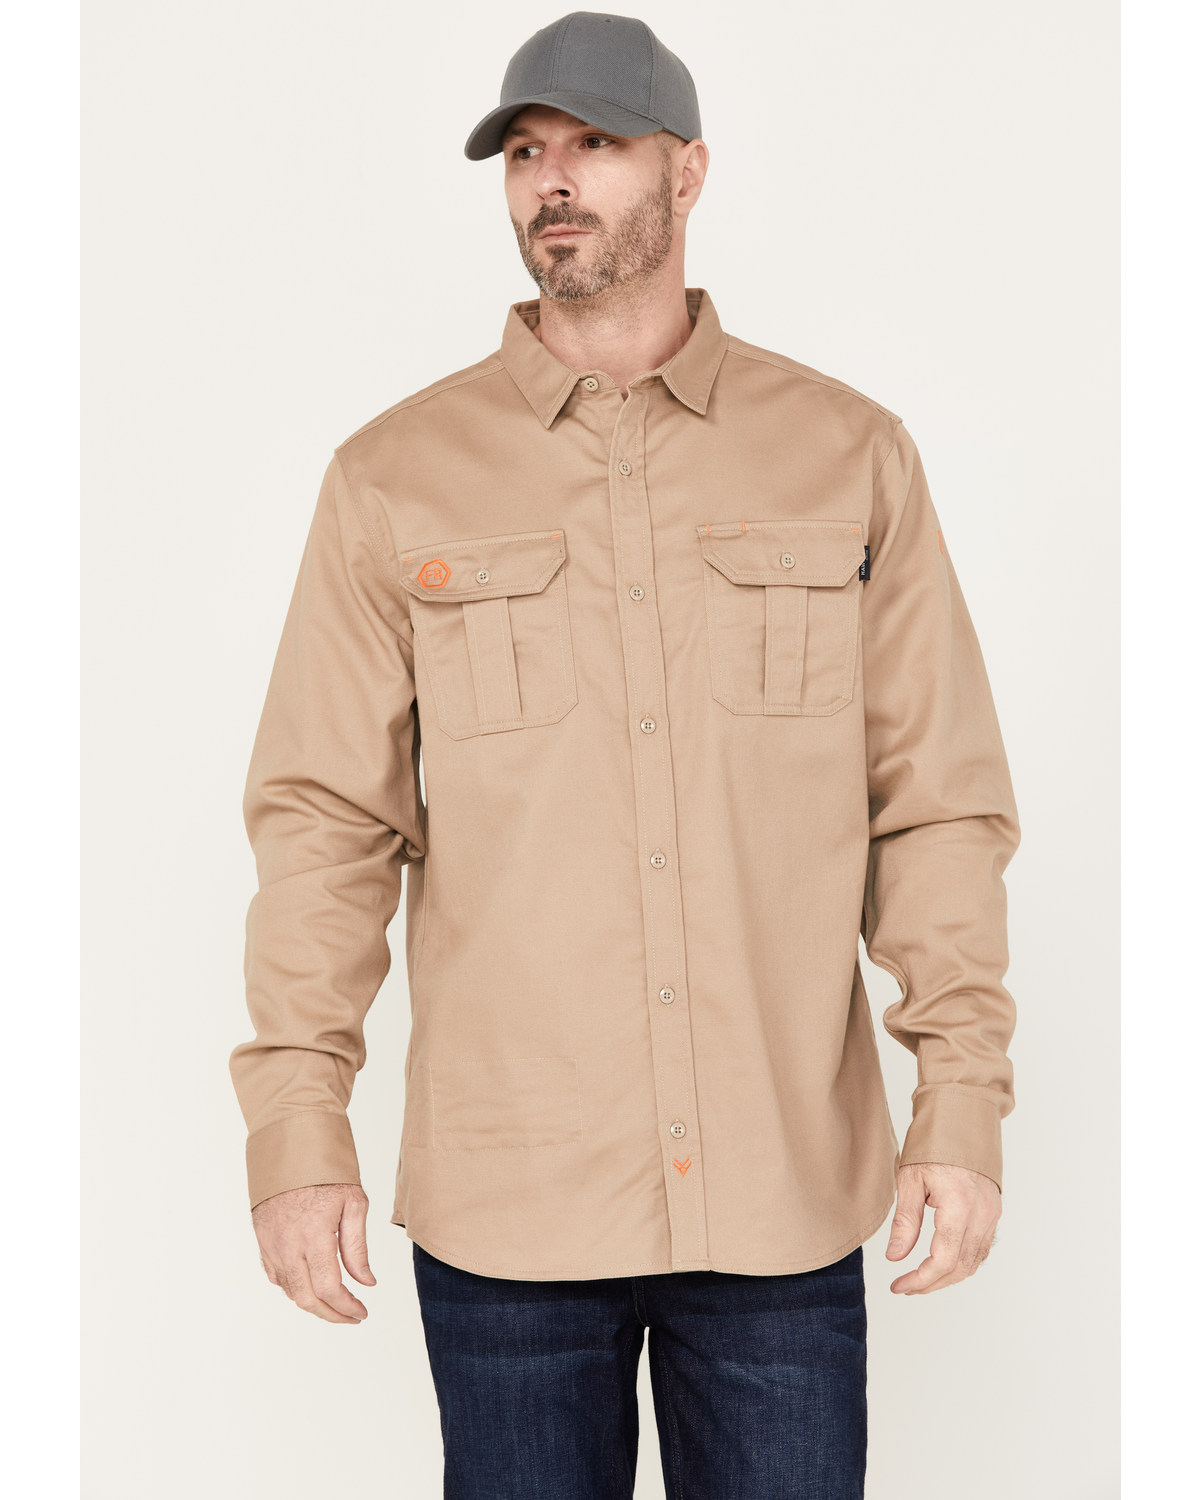 Hawx Men's FR Solid Long Sleeve Button-Down Woven Shirt